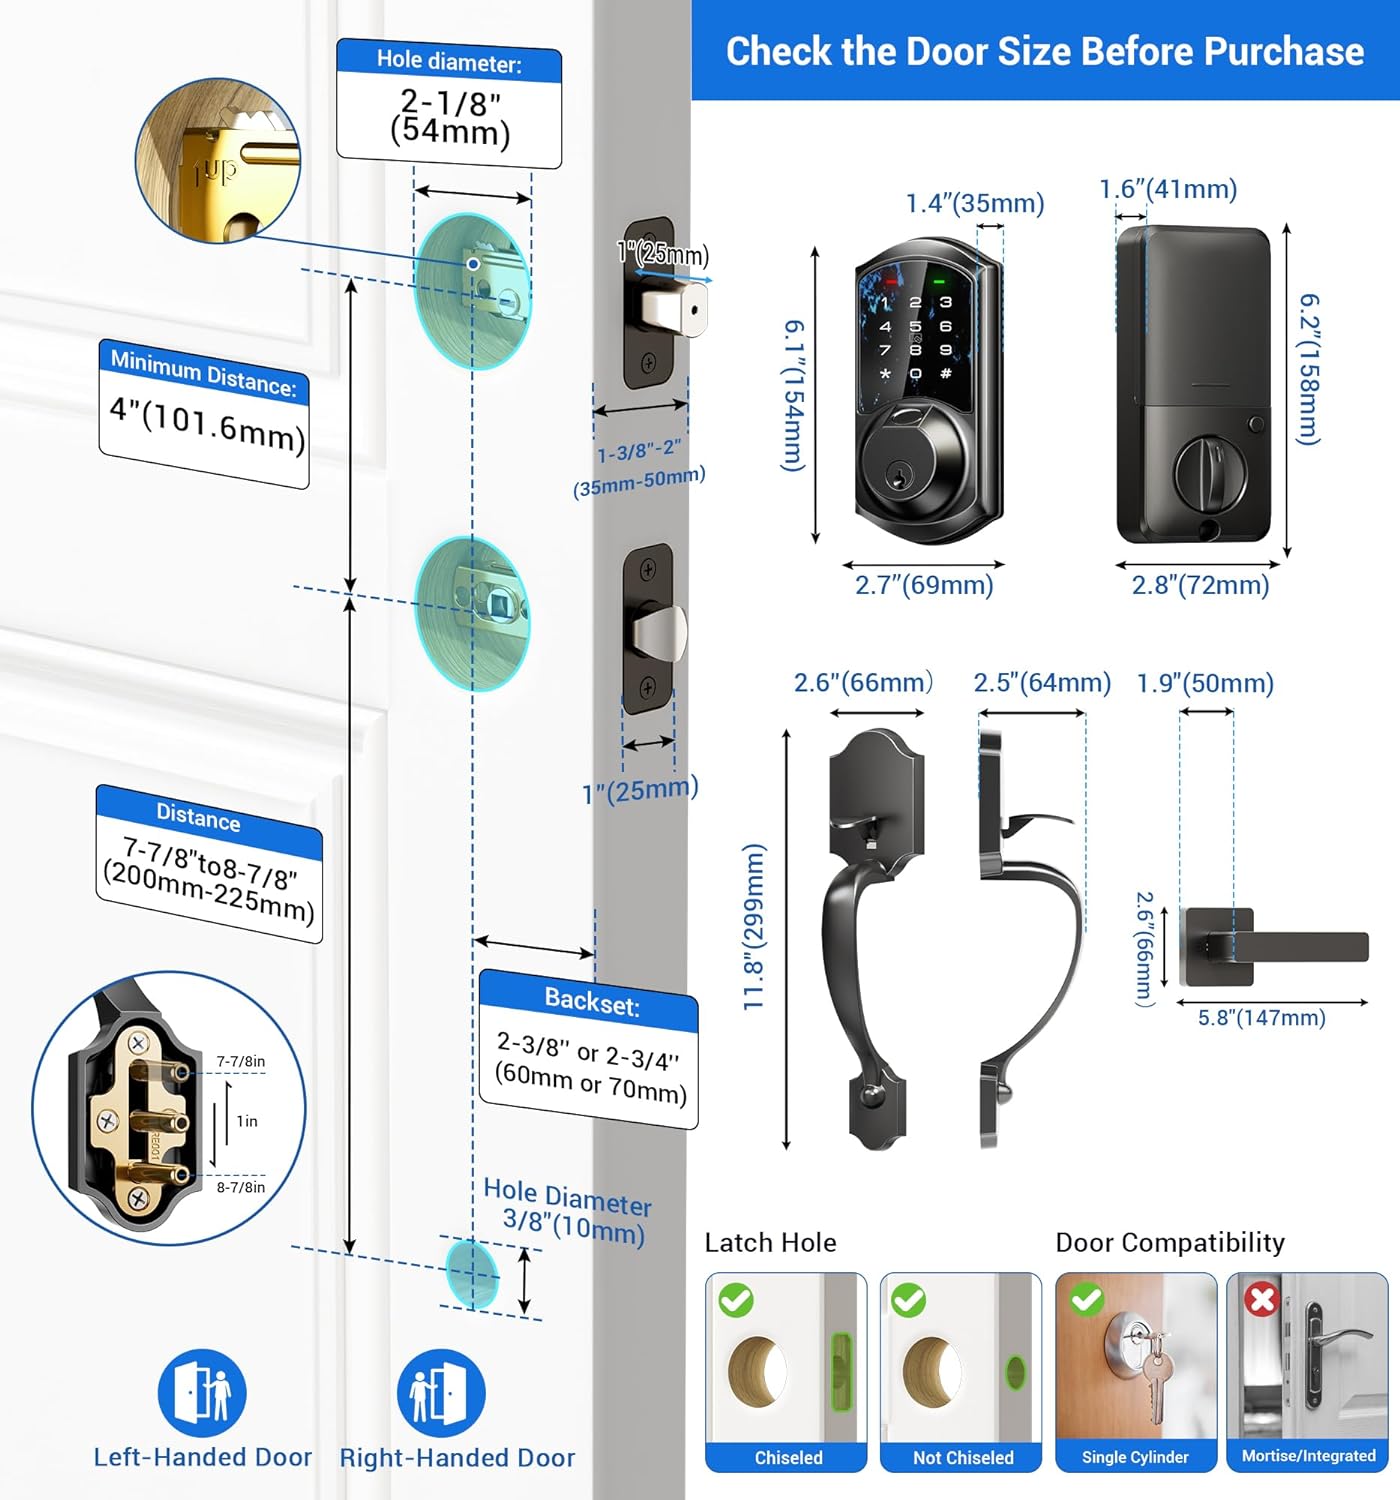 Veise VE07-H Fingerprint Smart Locks for Front Door with Handle Set, App Control, Keyless Entry Keypad Deadbolt, Digital Electronic Touchscreen, Easy Install, Auto Lock